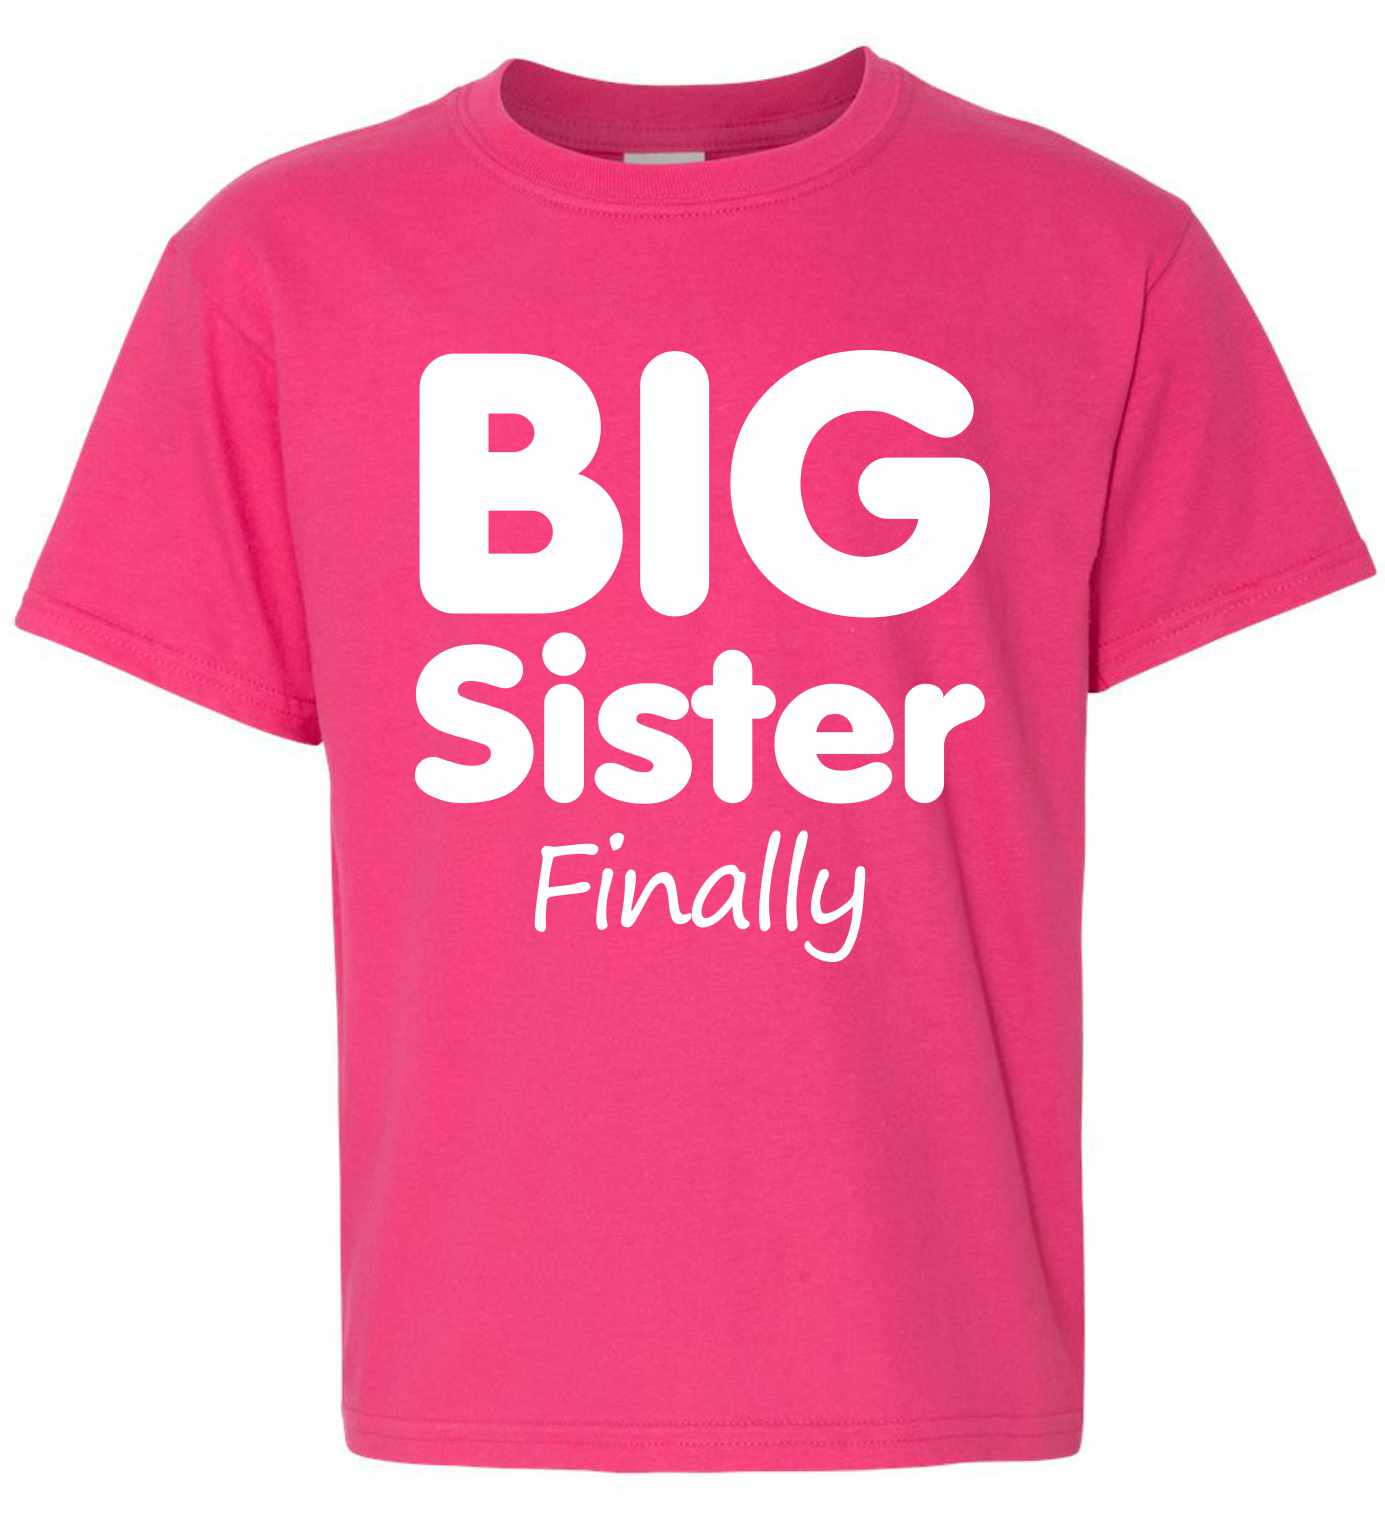 Big Sister Finally on Kids T-Shirt (#1376-201)